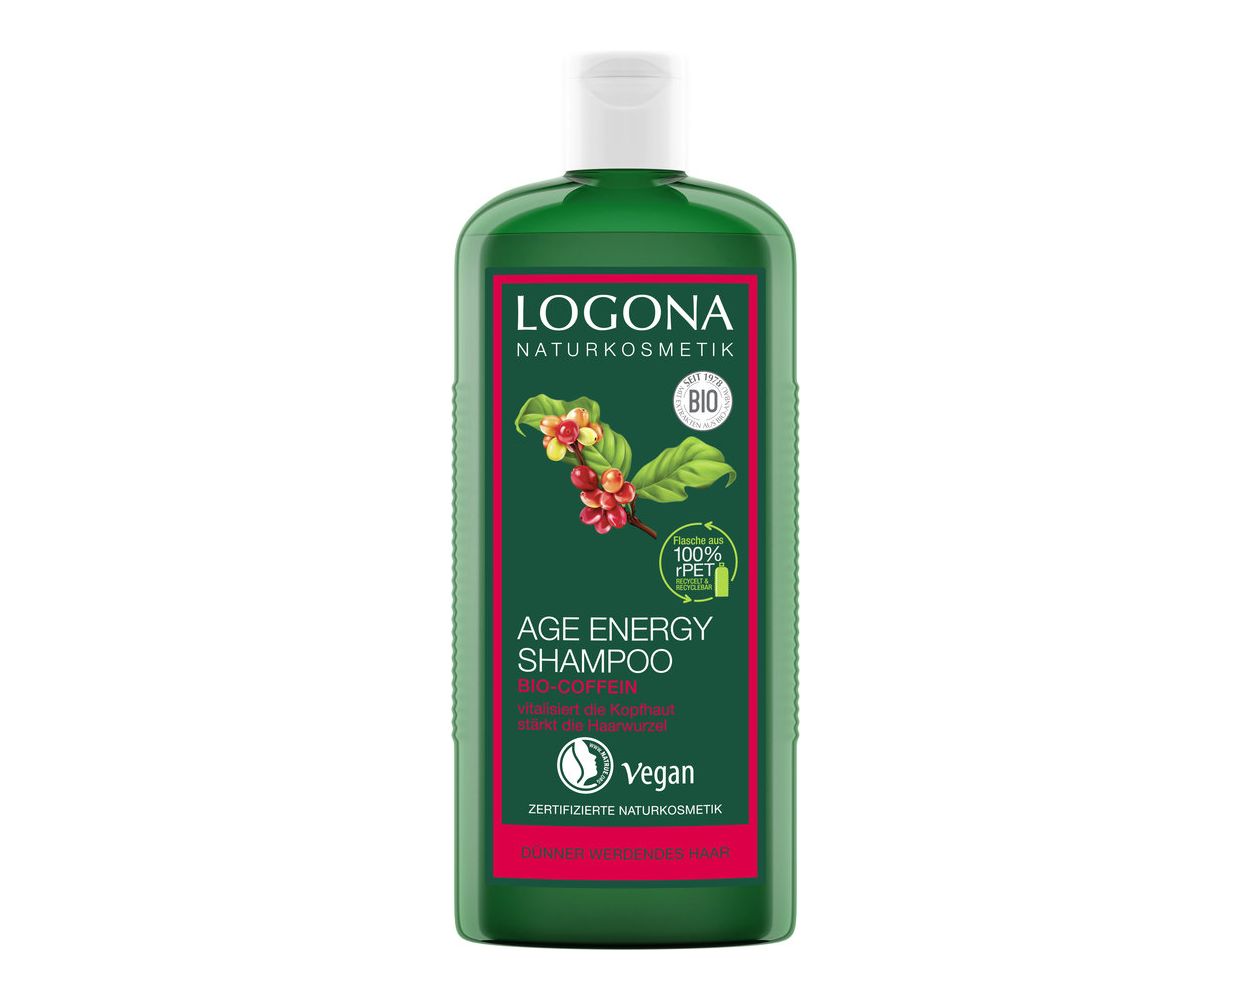 250 Energy Bio-Coffein Shampoo LOGONA ml Age